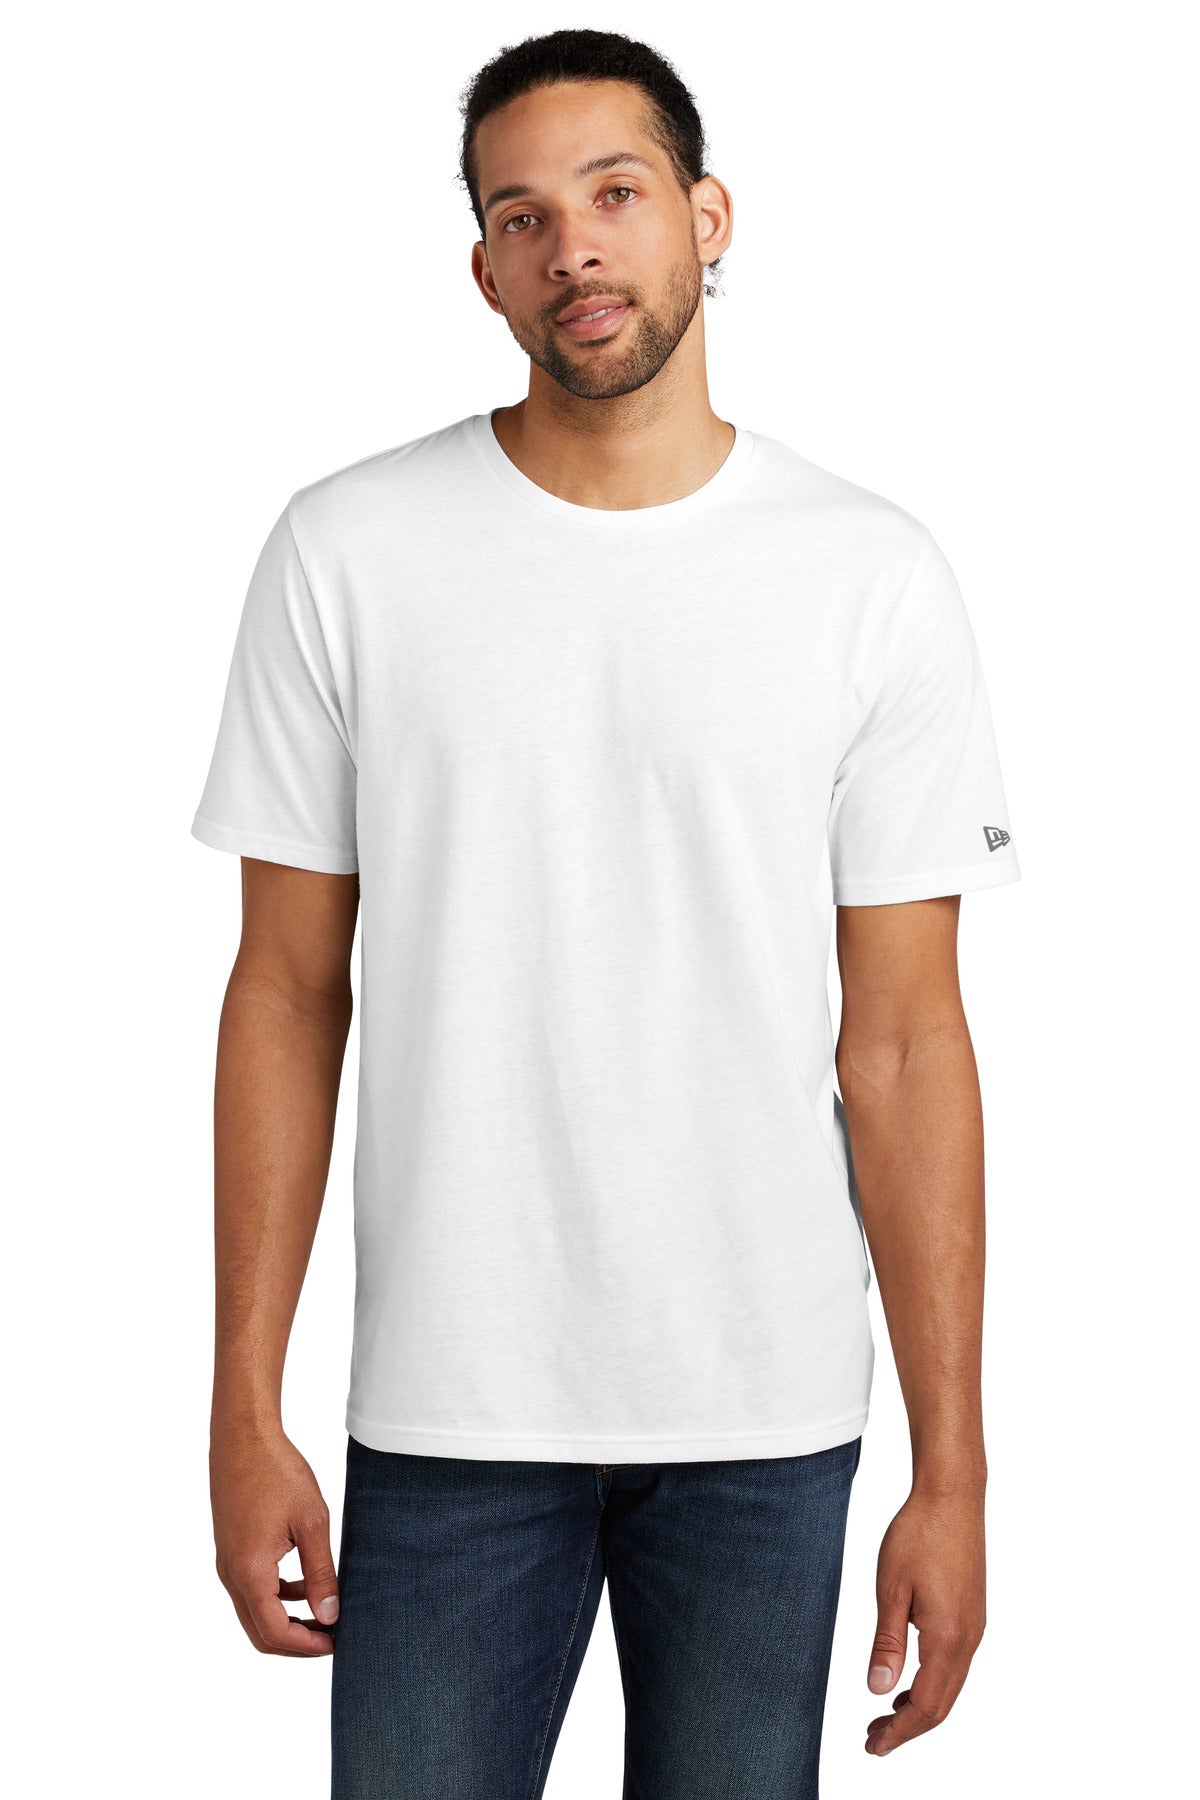 Photo of New Era T-Shirts NEA135  color  Fan White Solid